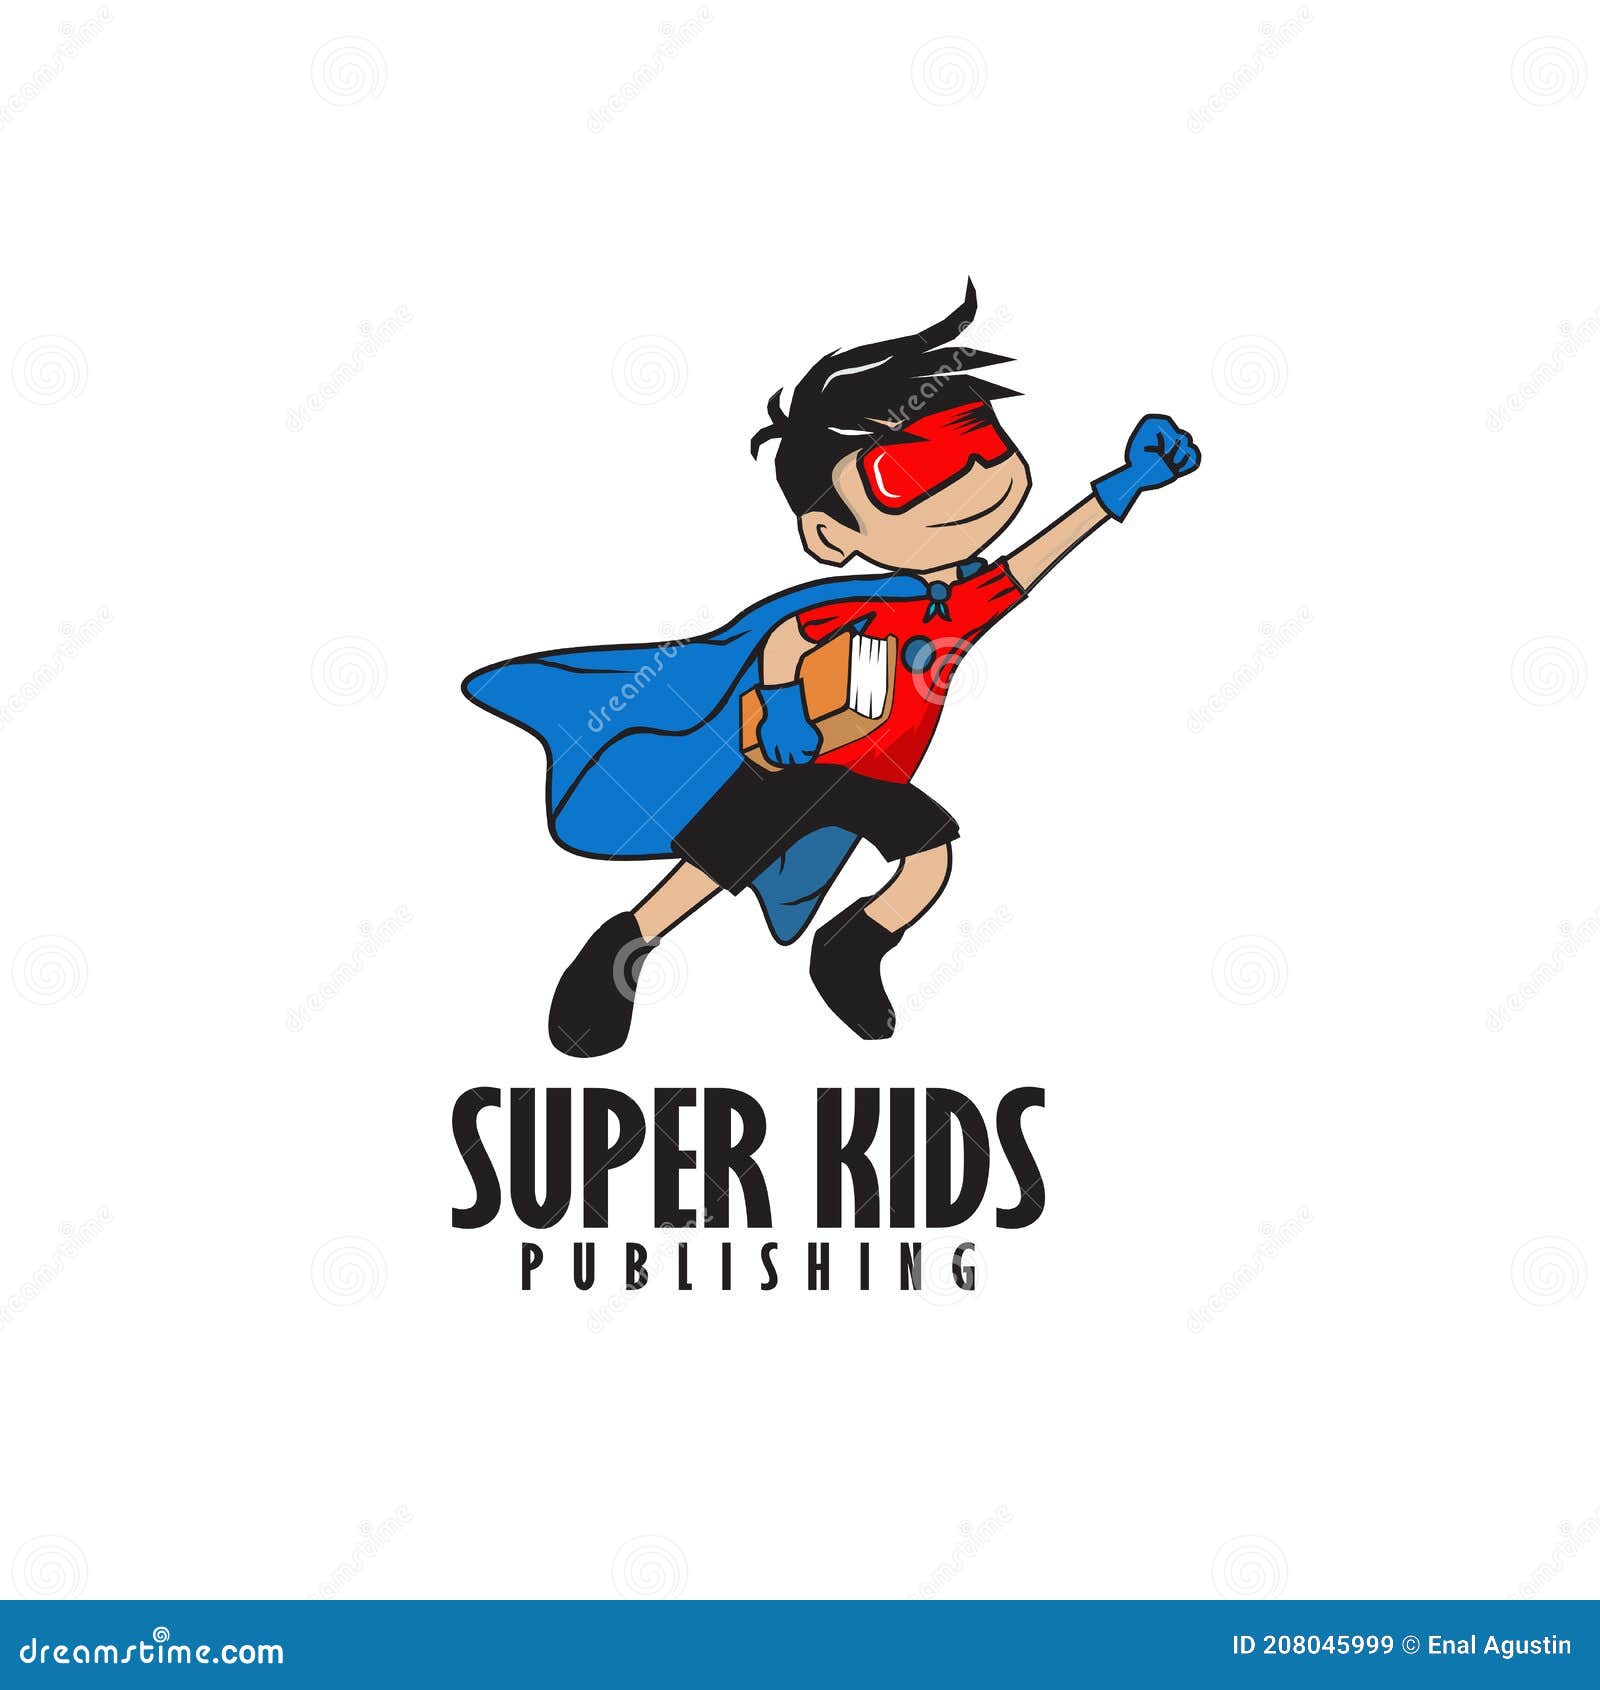 Create vintage and wonderful super hero logo design by Desmond_littel |  Fiverr